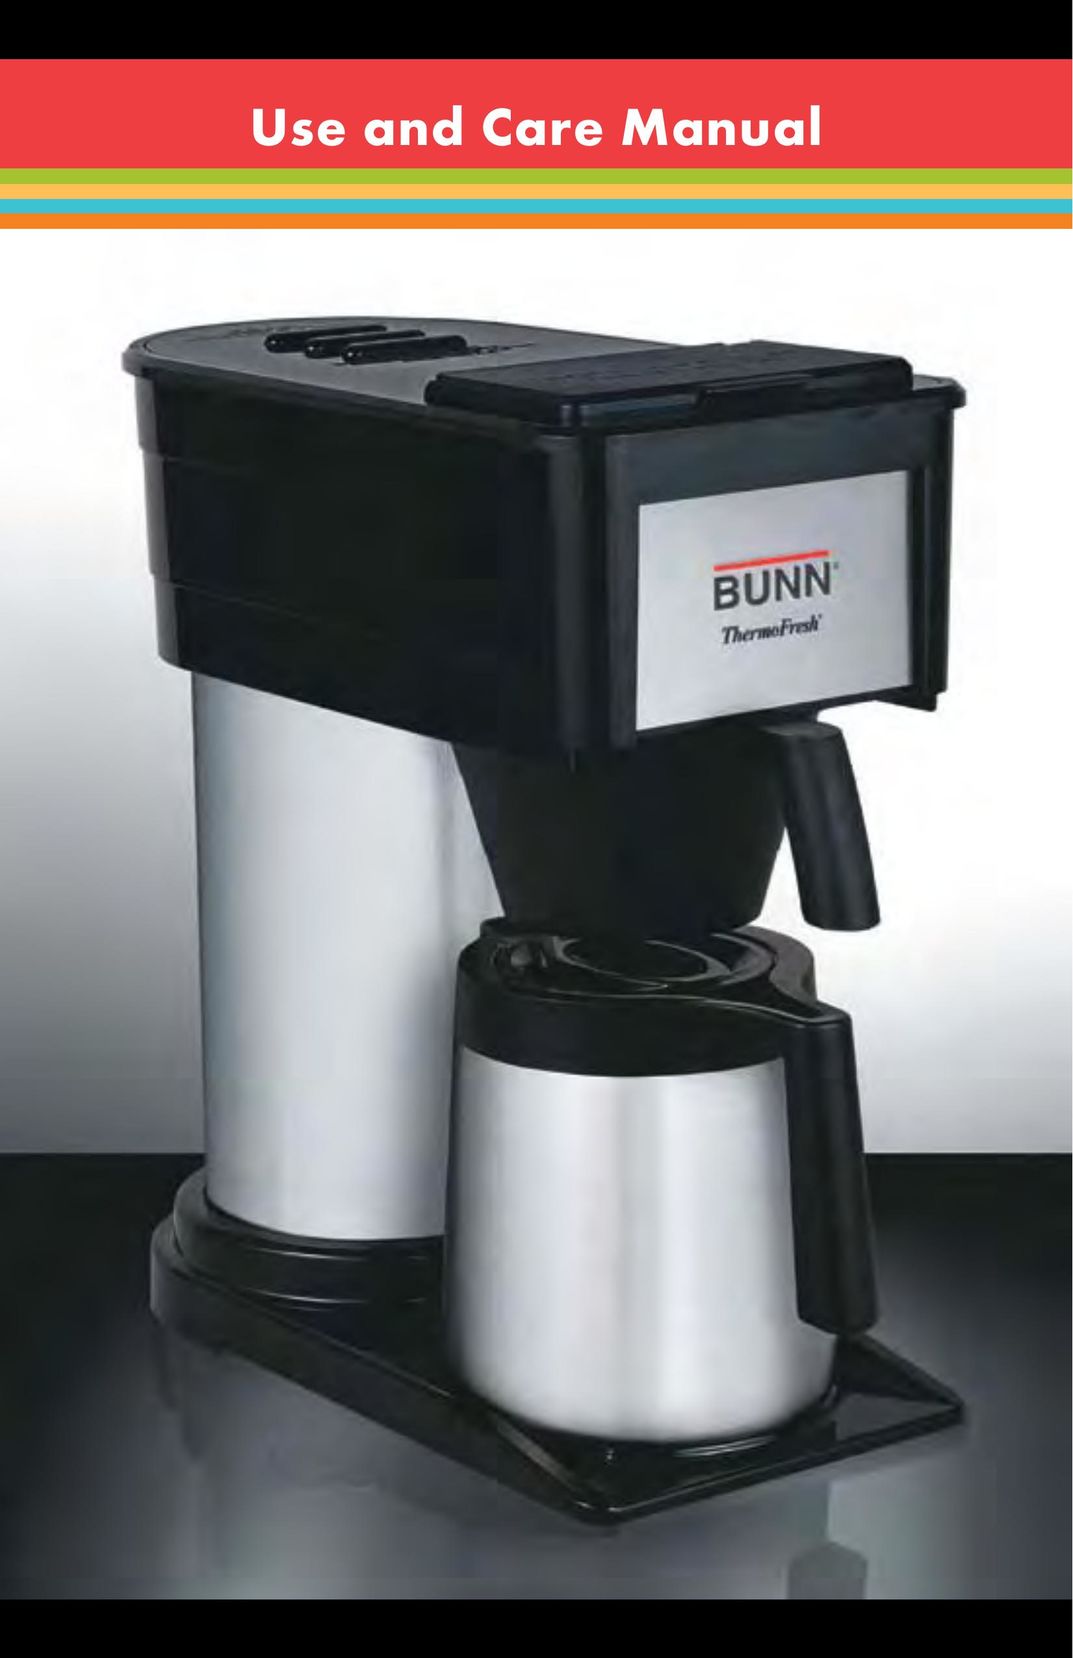 Bunn 38200.0016 Coffeemaker User Manual